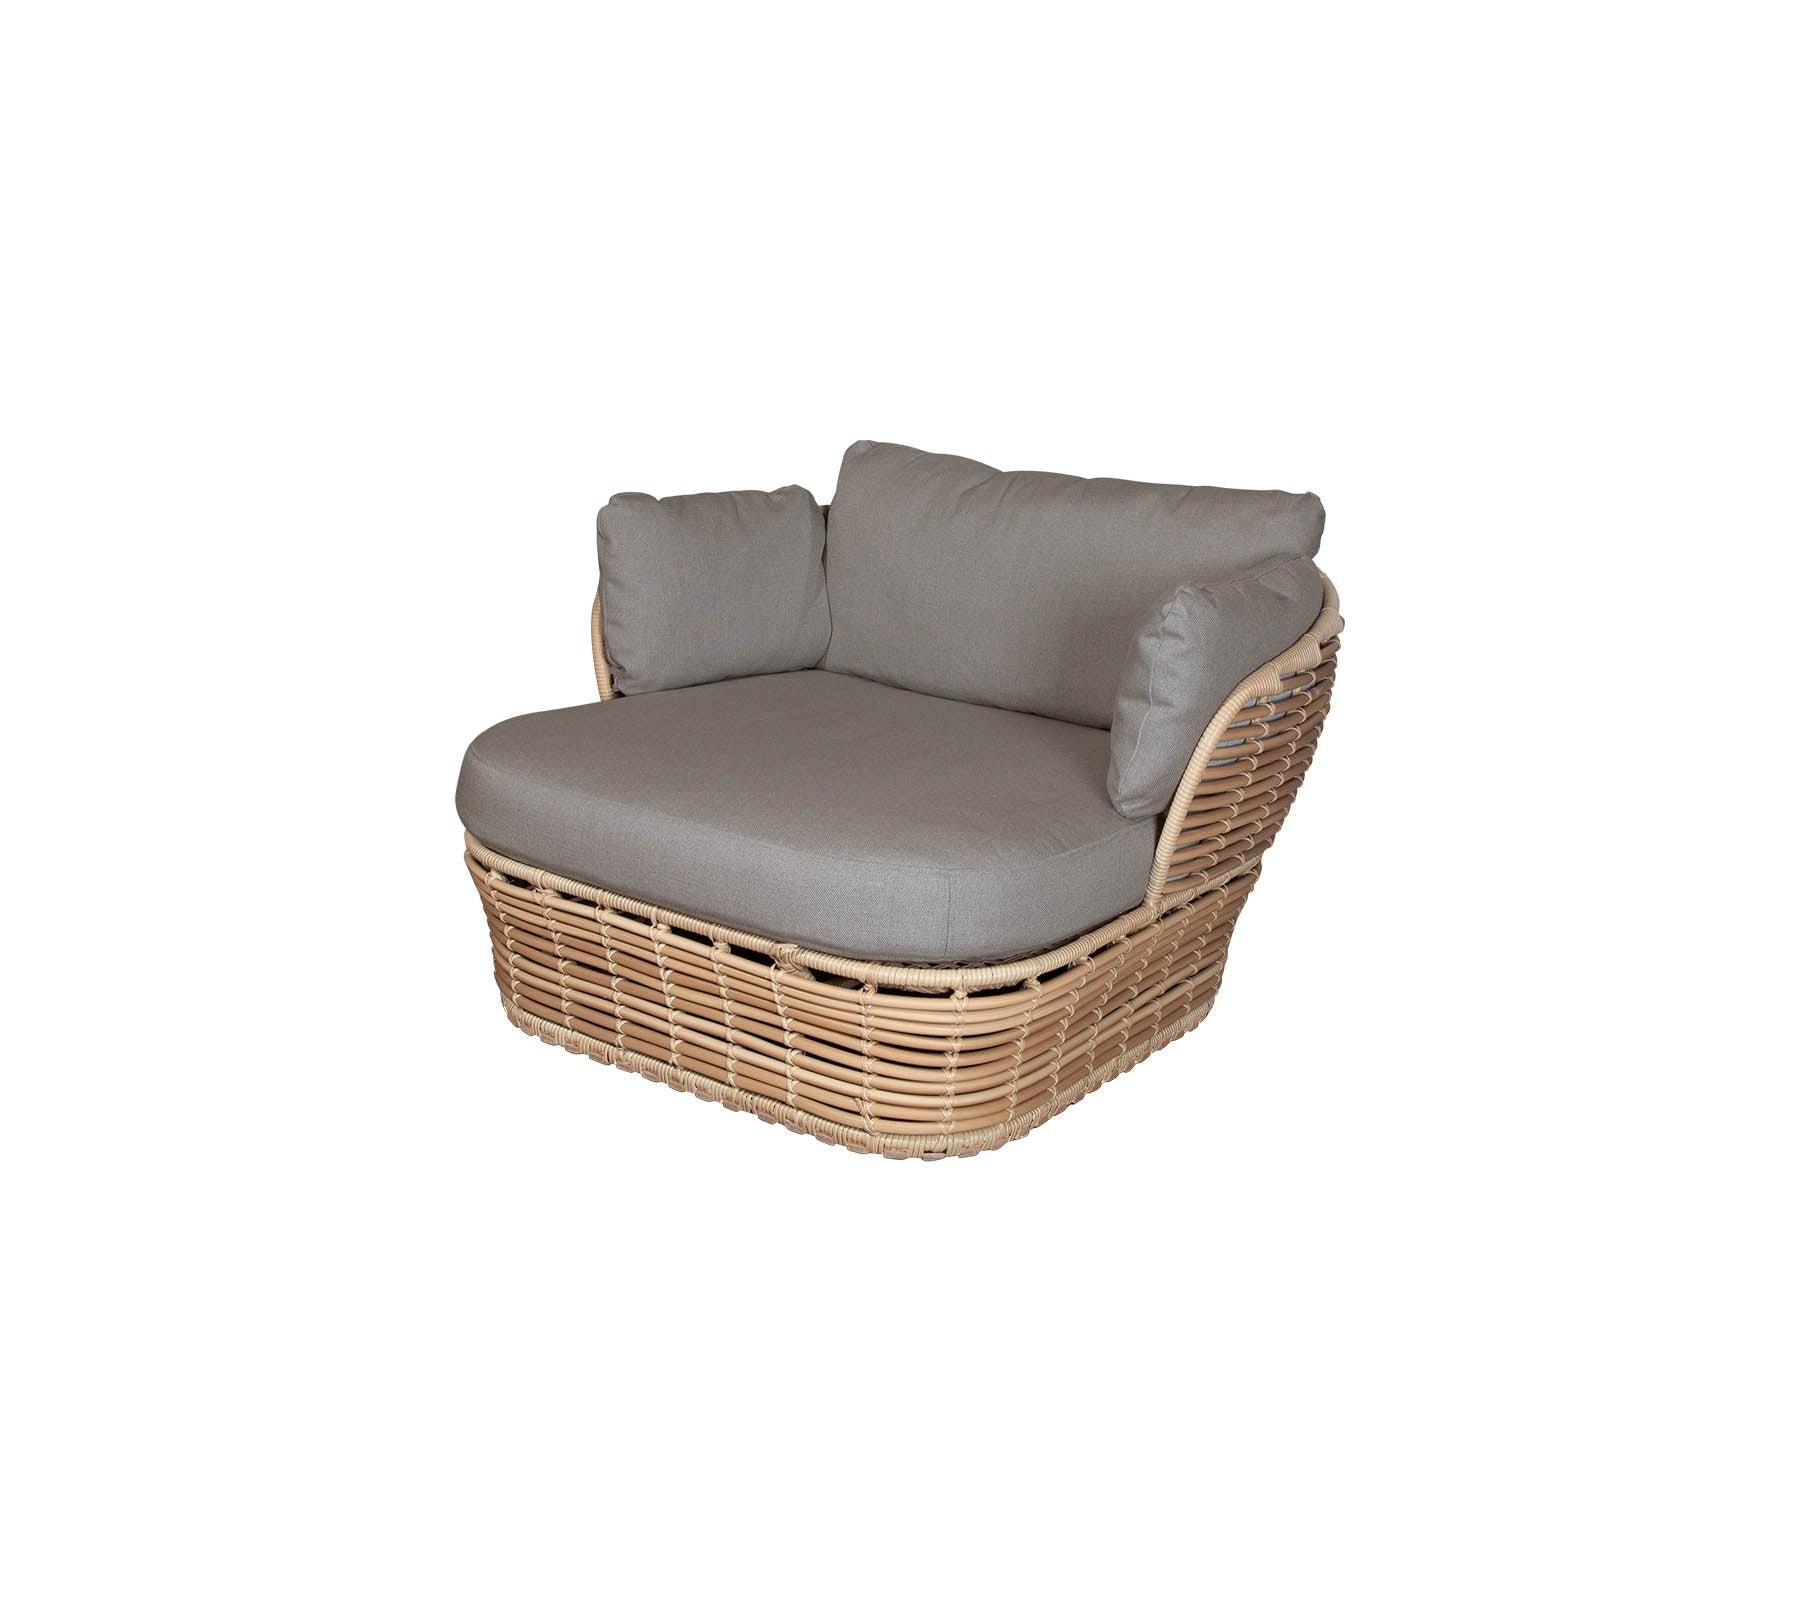 Cane-line Basket Lounge Chair 54200GAITG